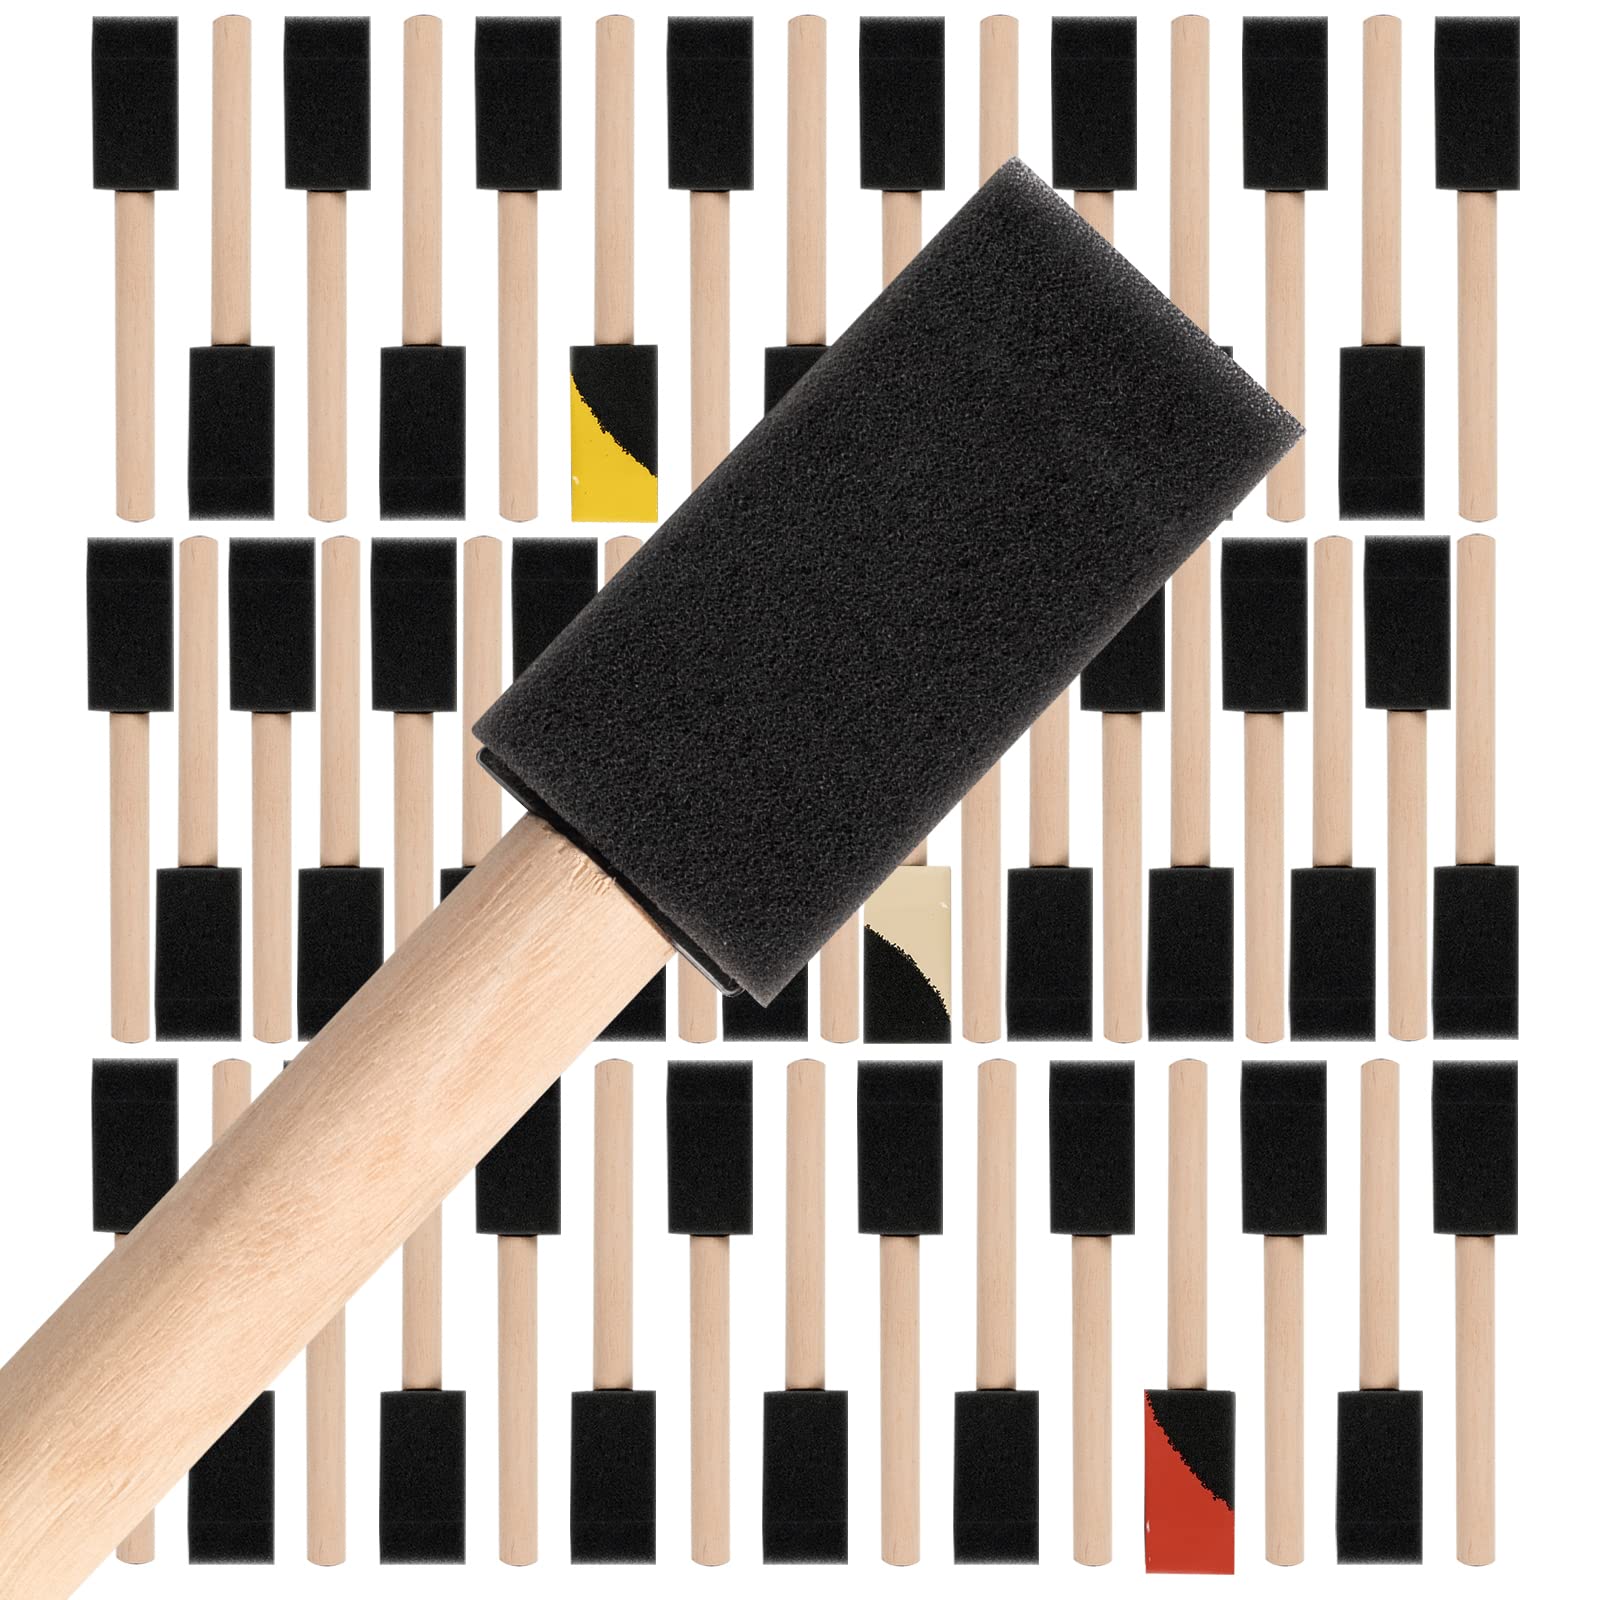 Mister Rui-Poly Foam Paint Brushes 50 Pack, Sponge Paint Brushes